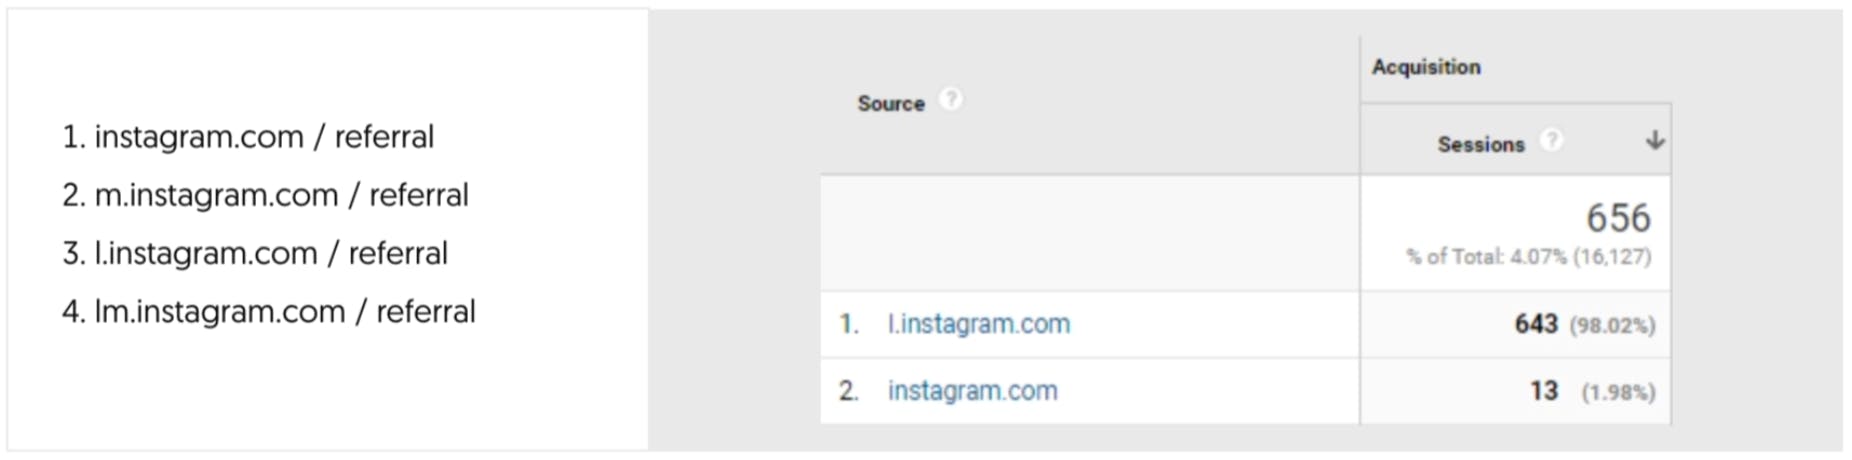 Screenshot showing segregated referral traffic from instagram